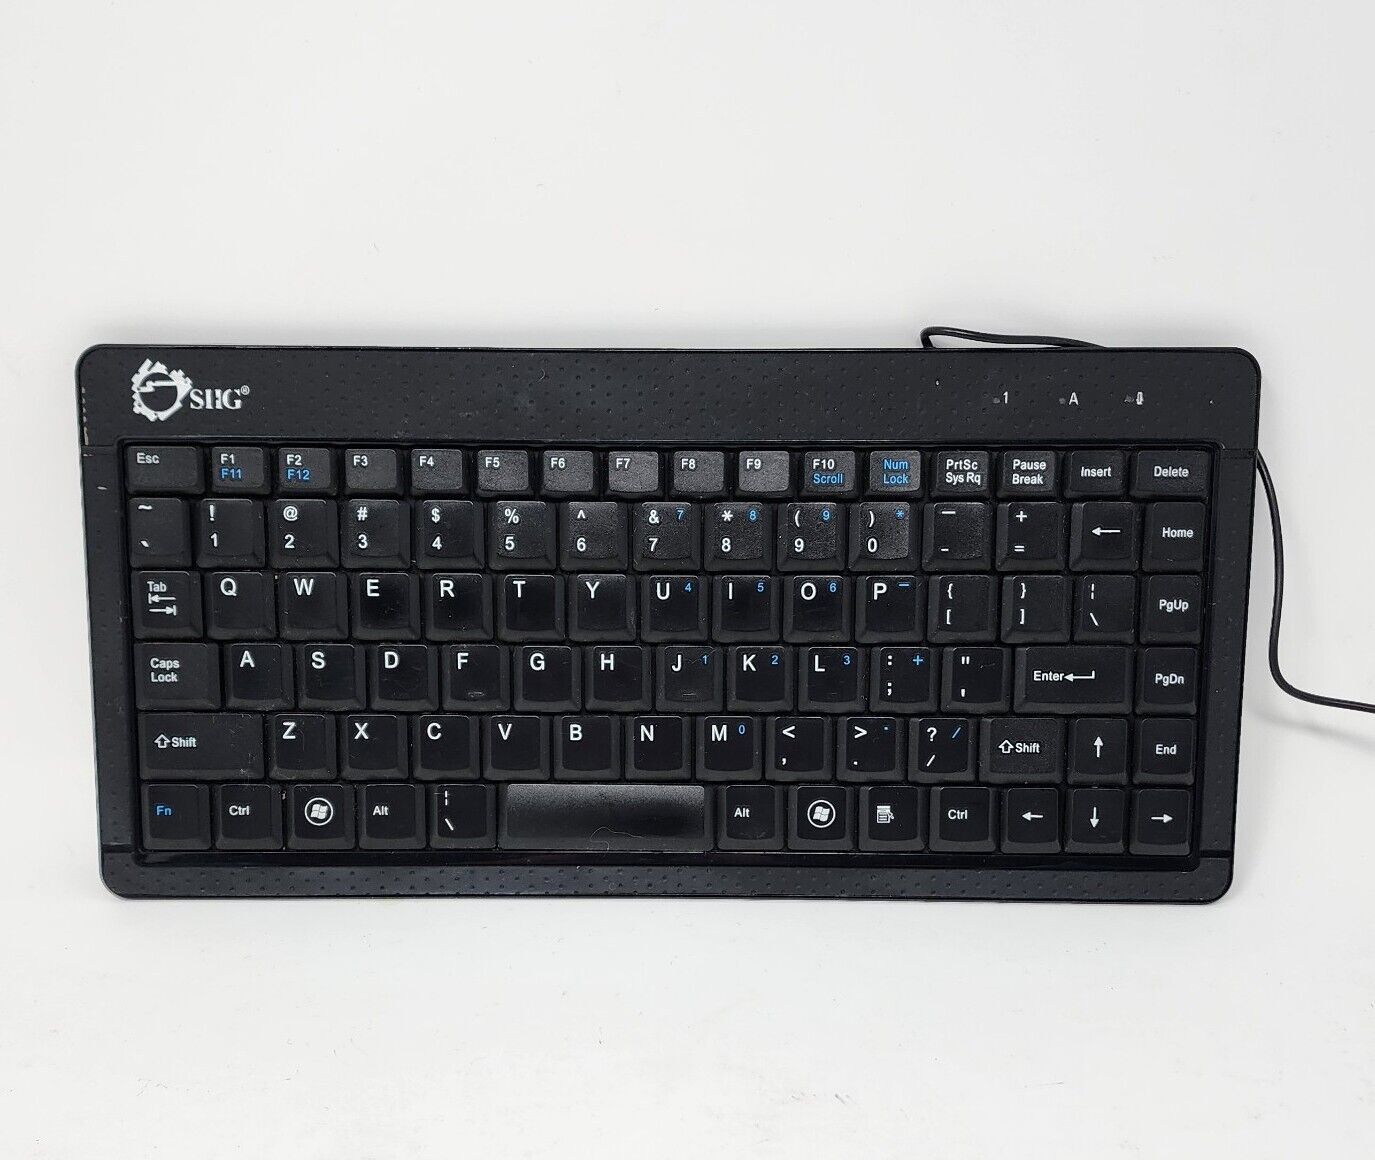 SIIG USB Wired Ultra Slim Mini Keyboard JK-US0512-S1 Comfort Laptop Style Keypad